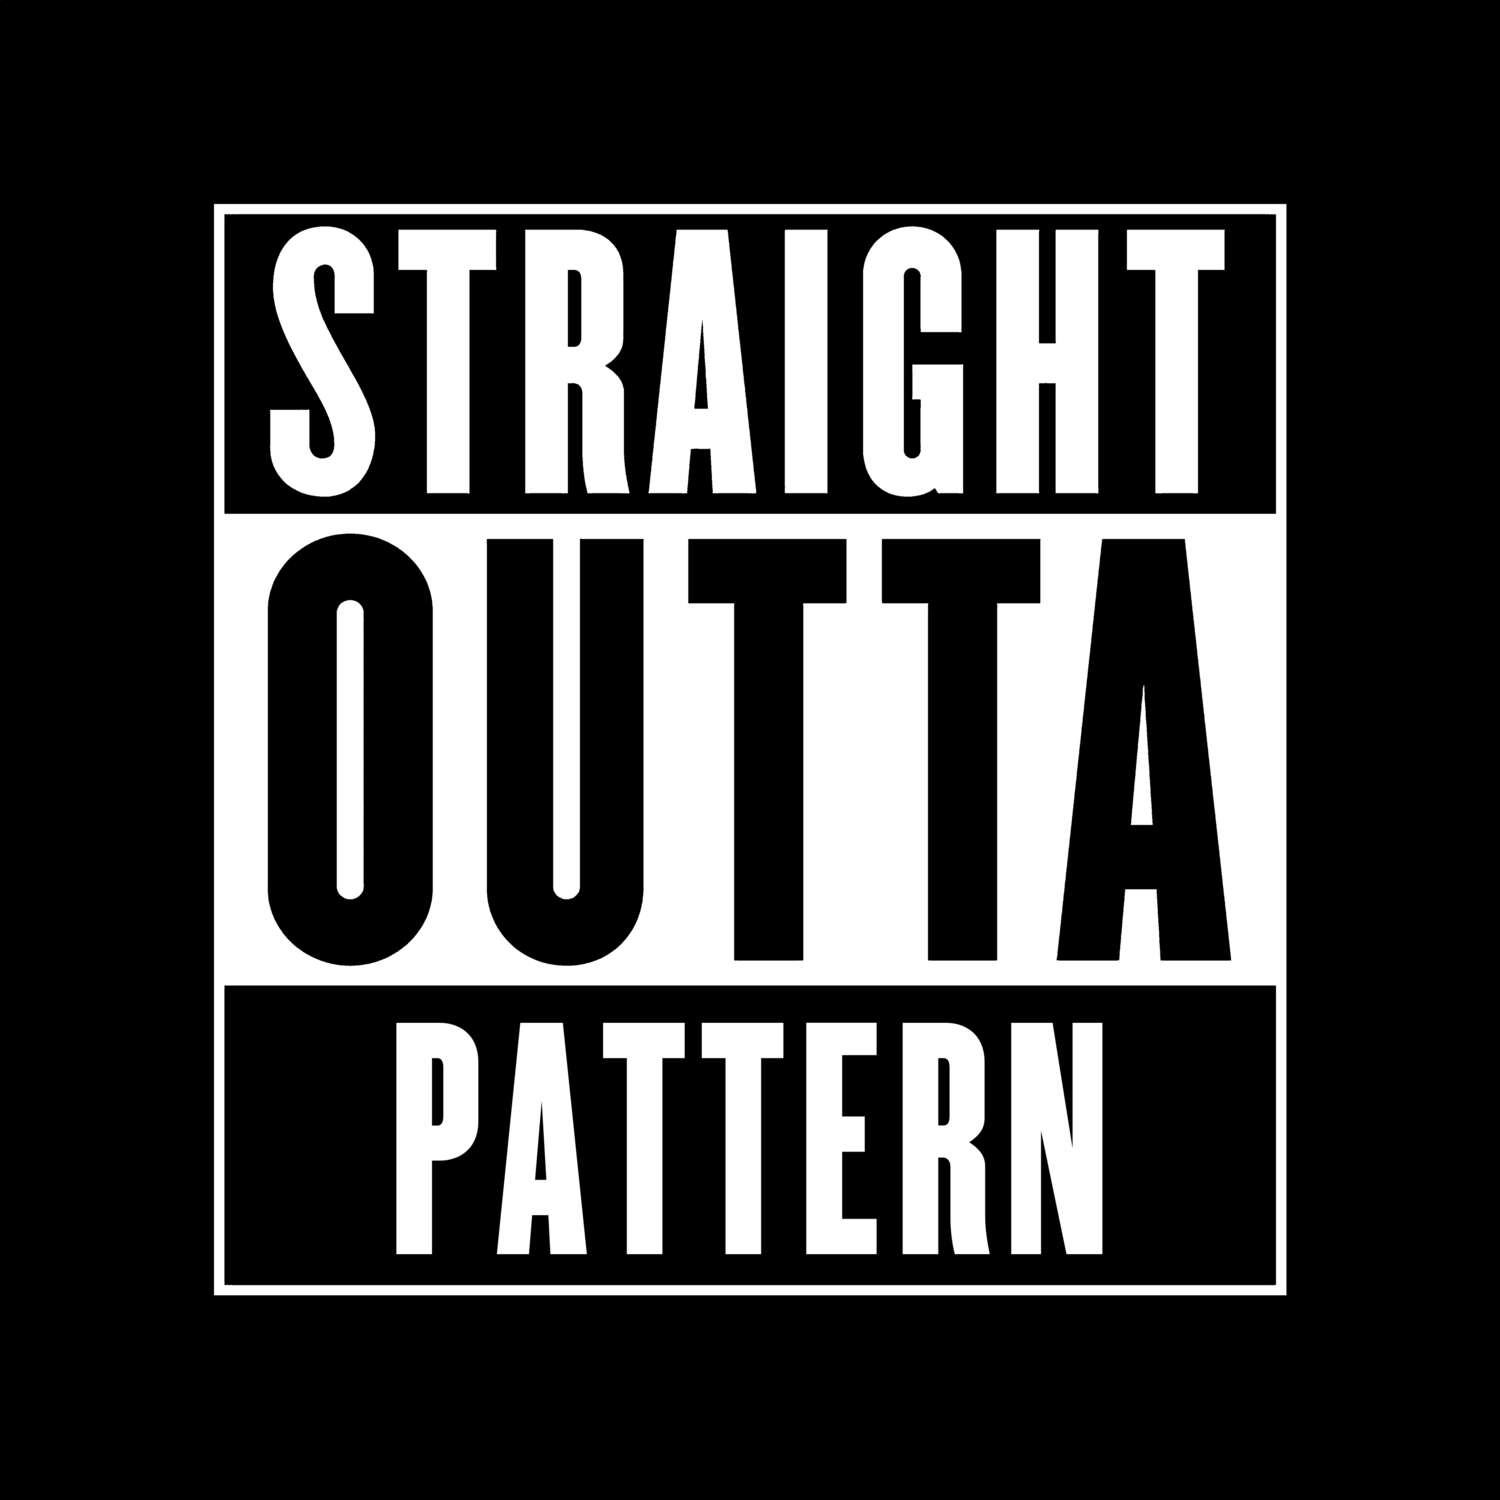 Pattern T-Shirt »Straight Outta«